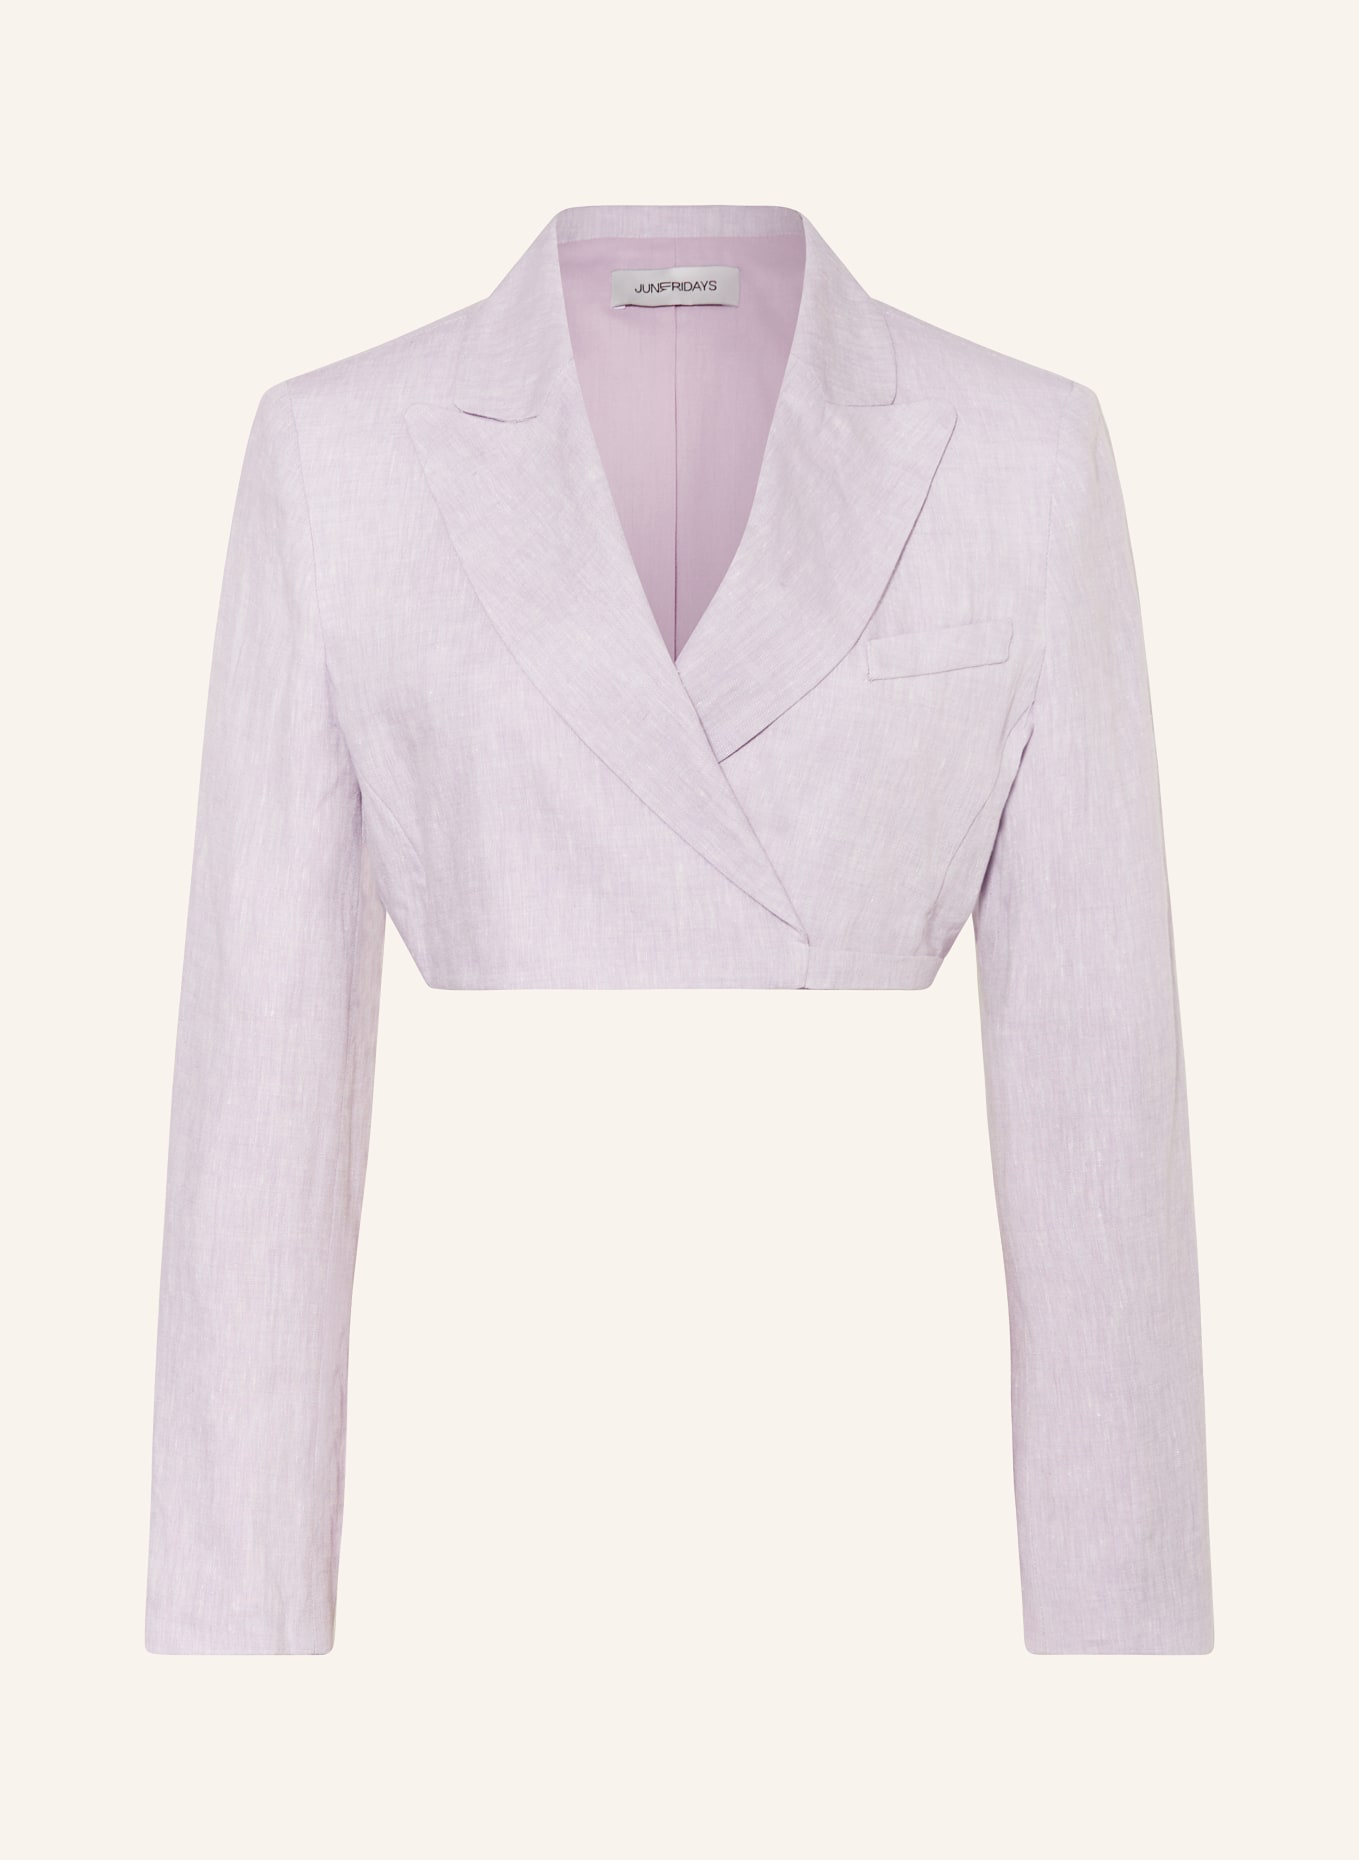 JUNE FRIDAYS Cropped linen blazer, Color: LIGHT PURPLE (Image 1)